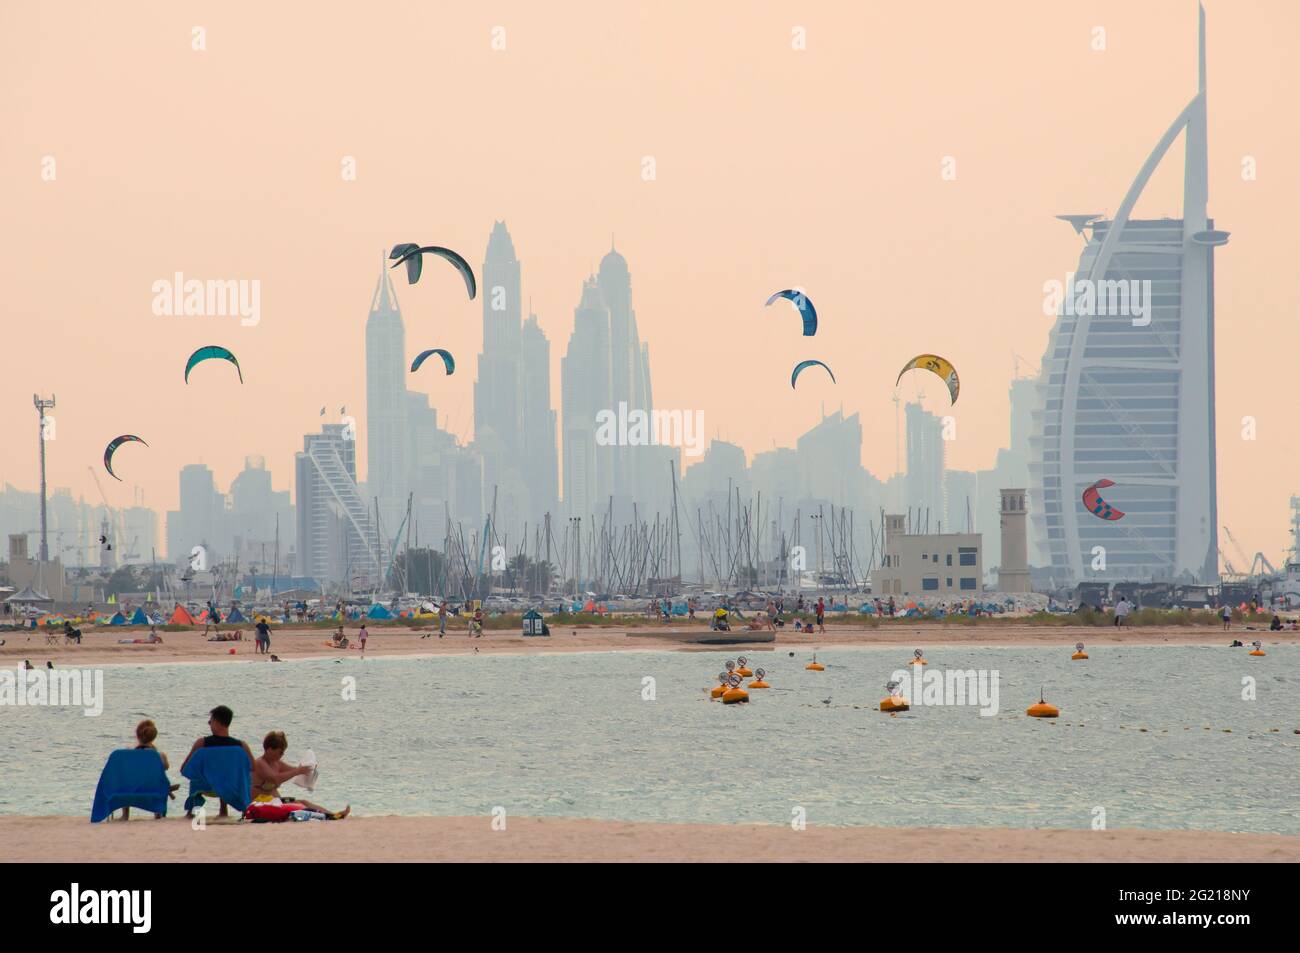 Dubai skyline with kite surfers in the sunset light Stock Photo